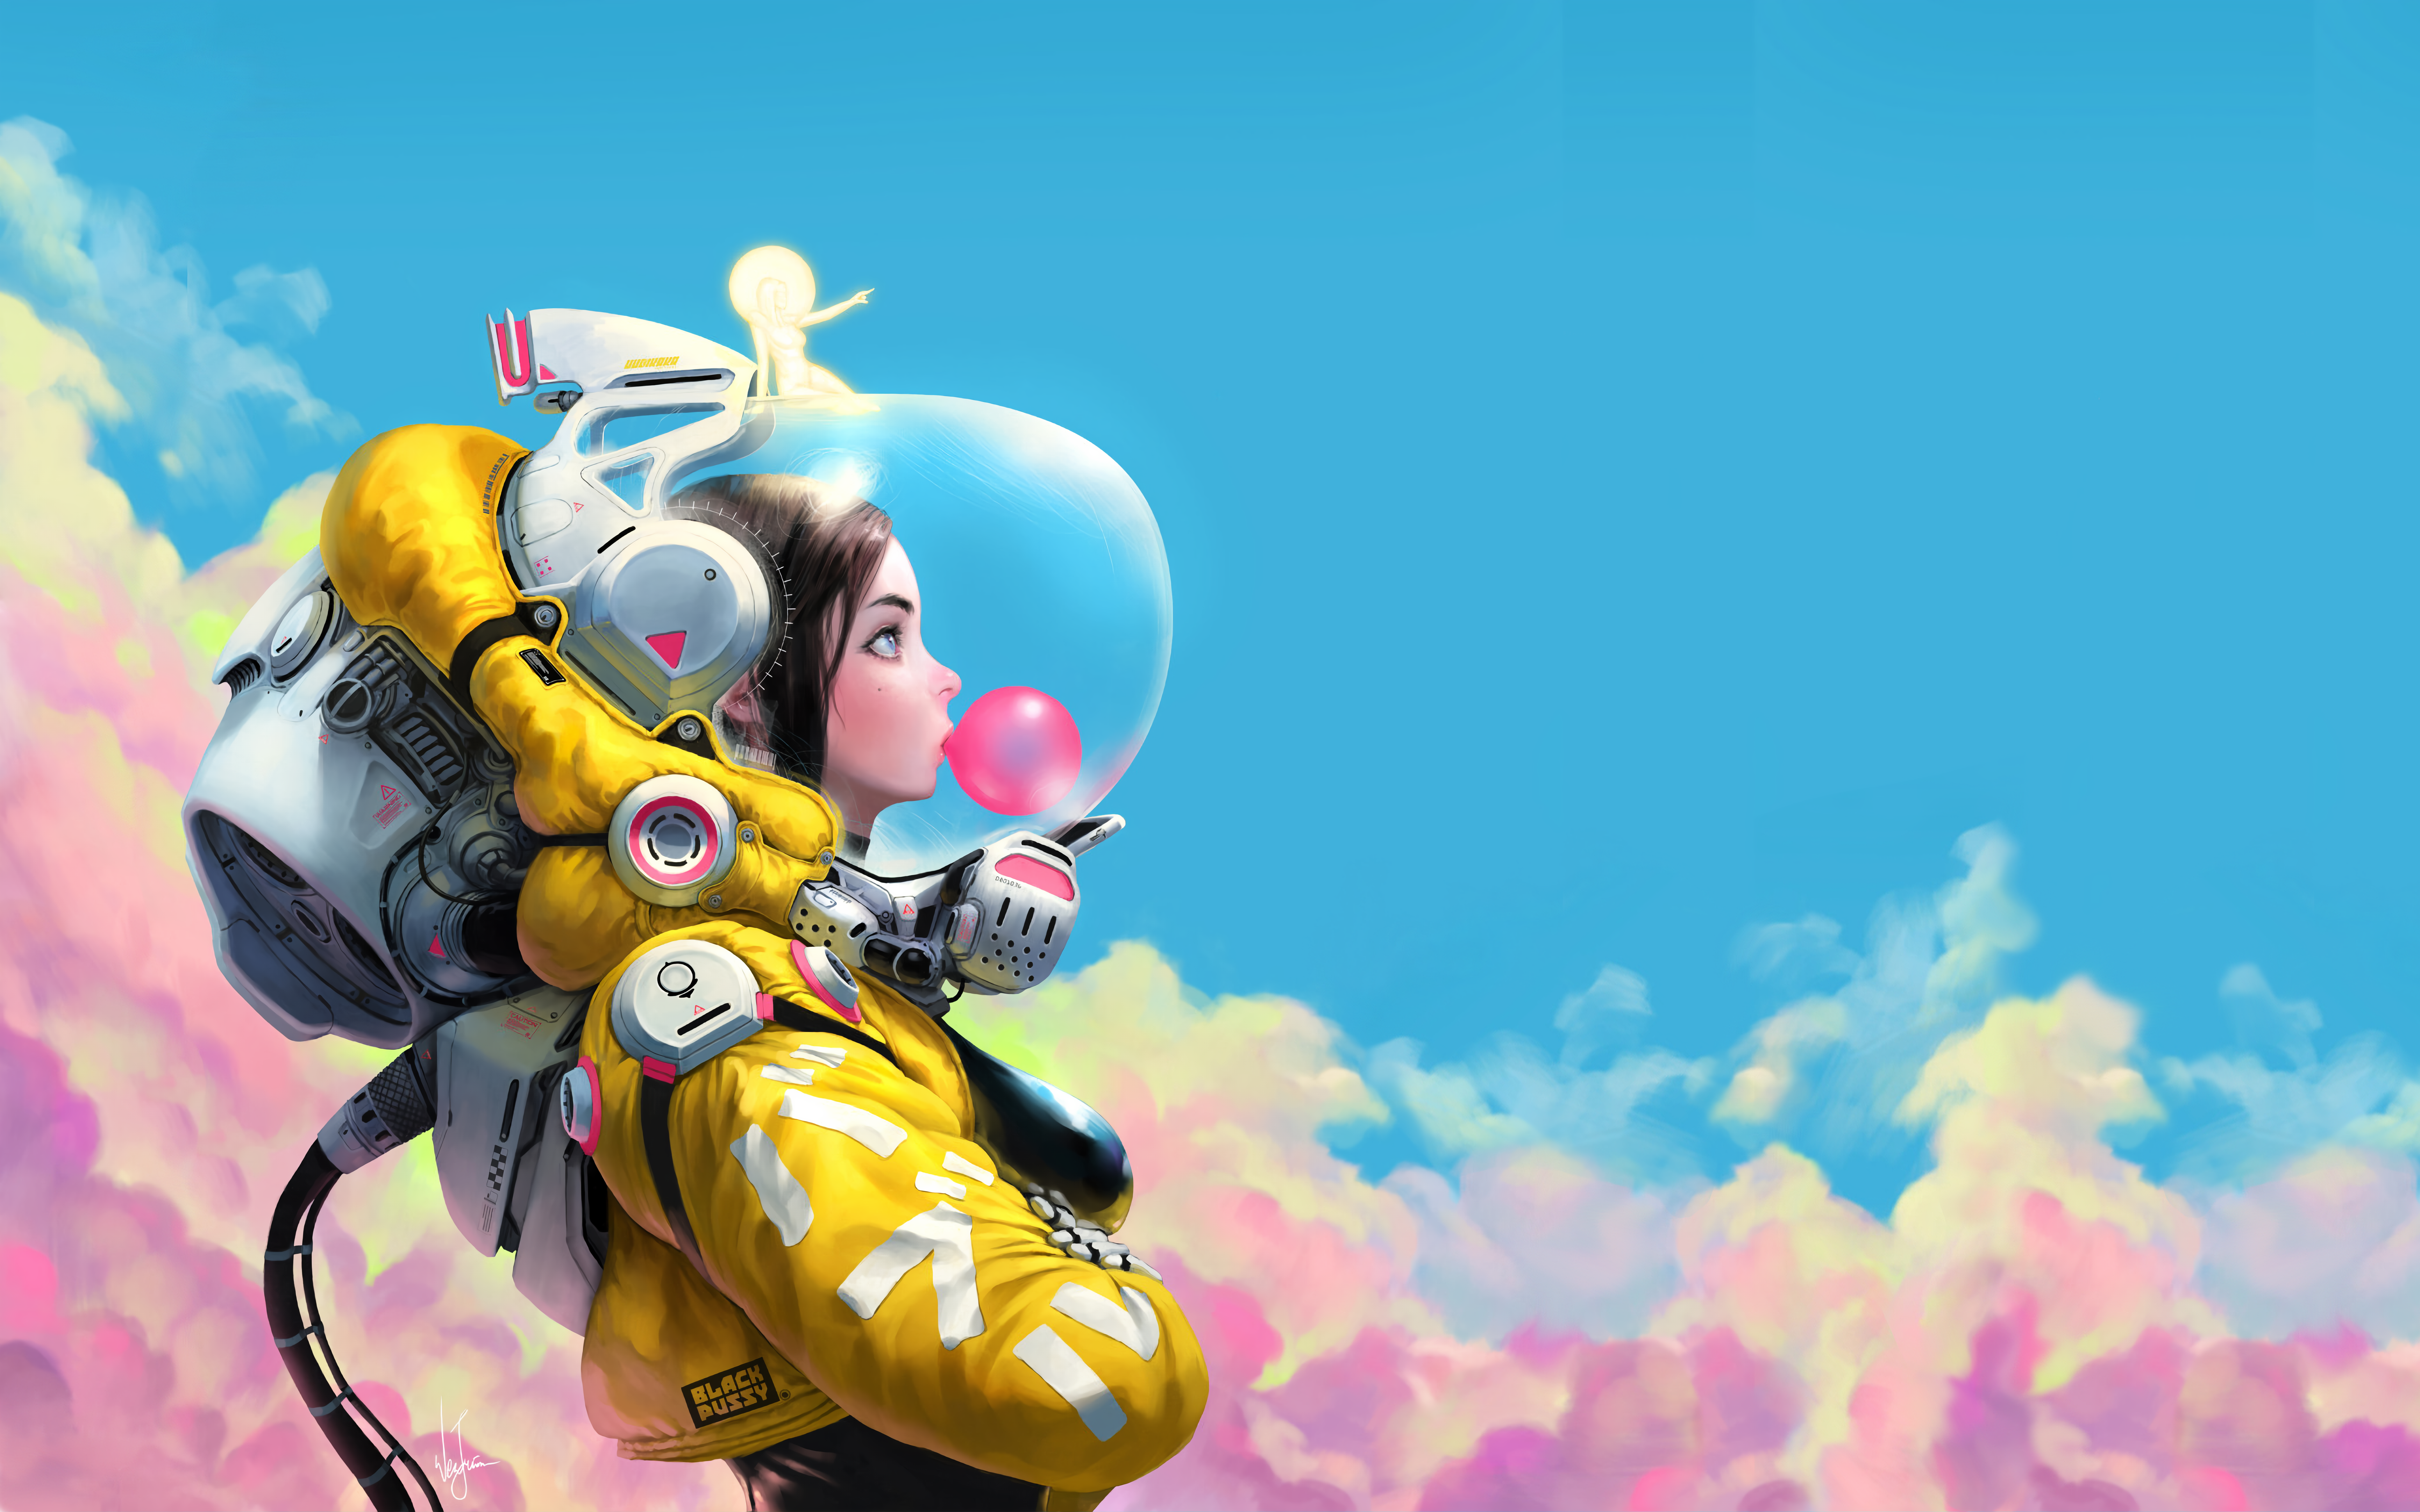 General 8320x5200 spacesuit bubble gum clouds digital art sky blue background women colorful artwork dark hair